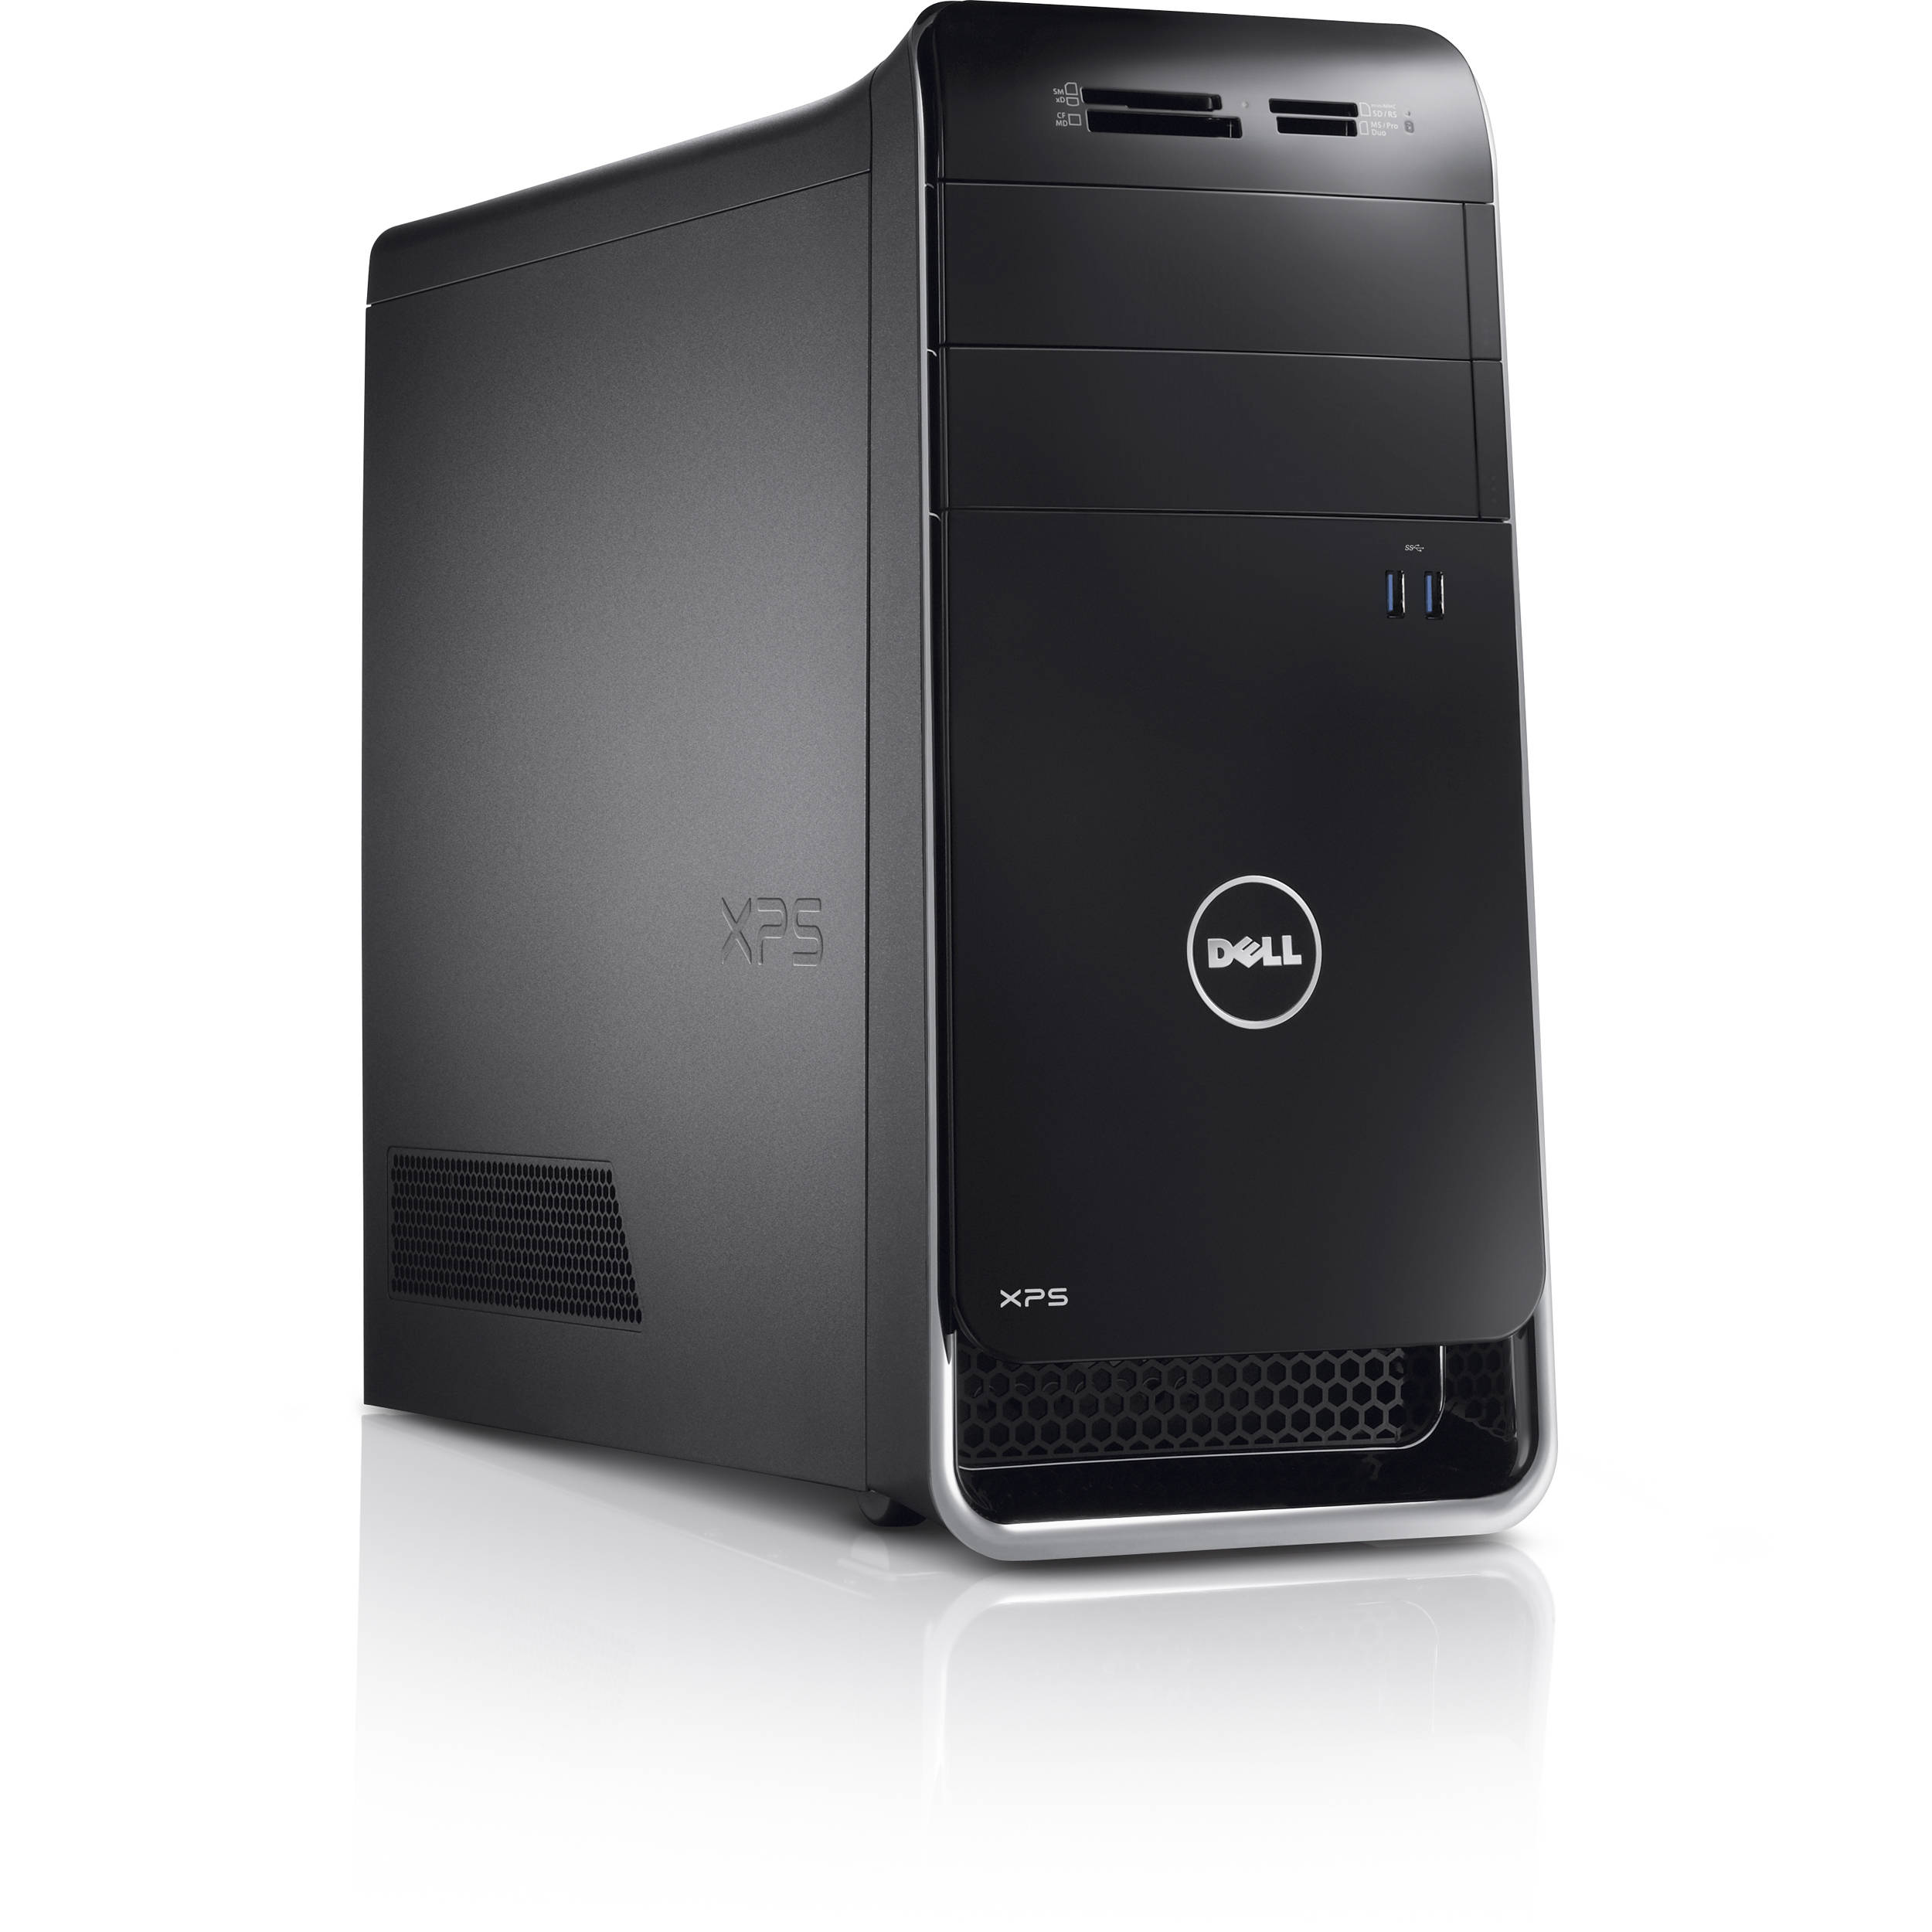 Dell Xps 8500 X8500 3686bk Desktop Computer Black X8500 3686bk